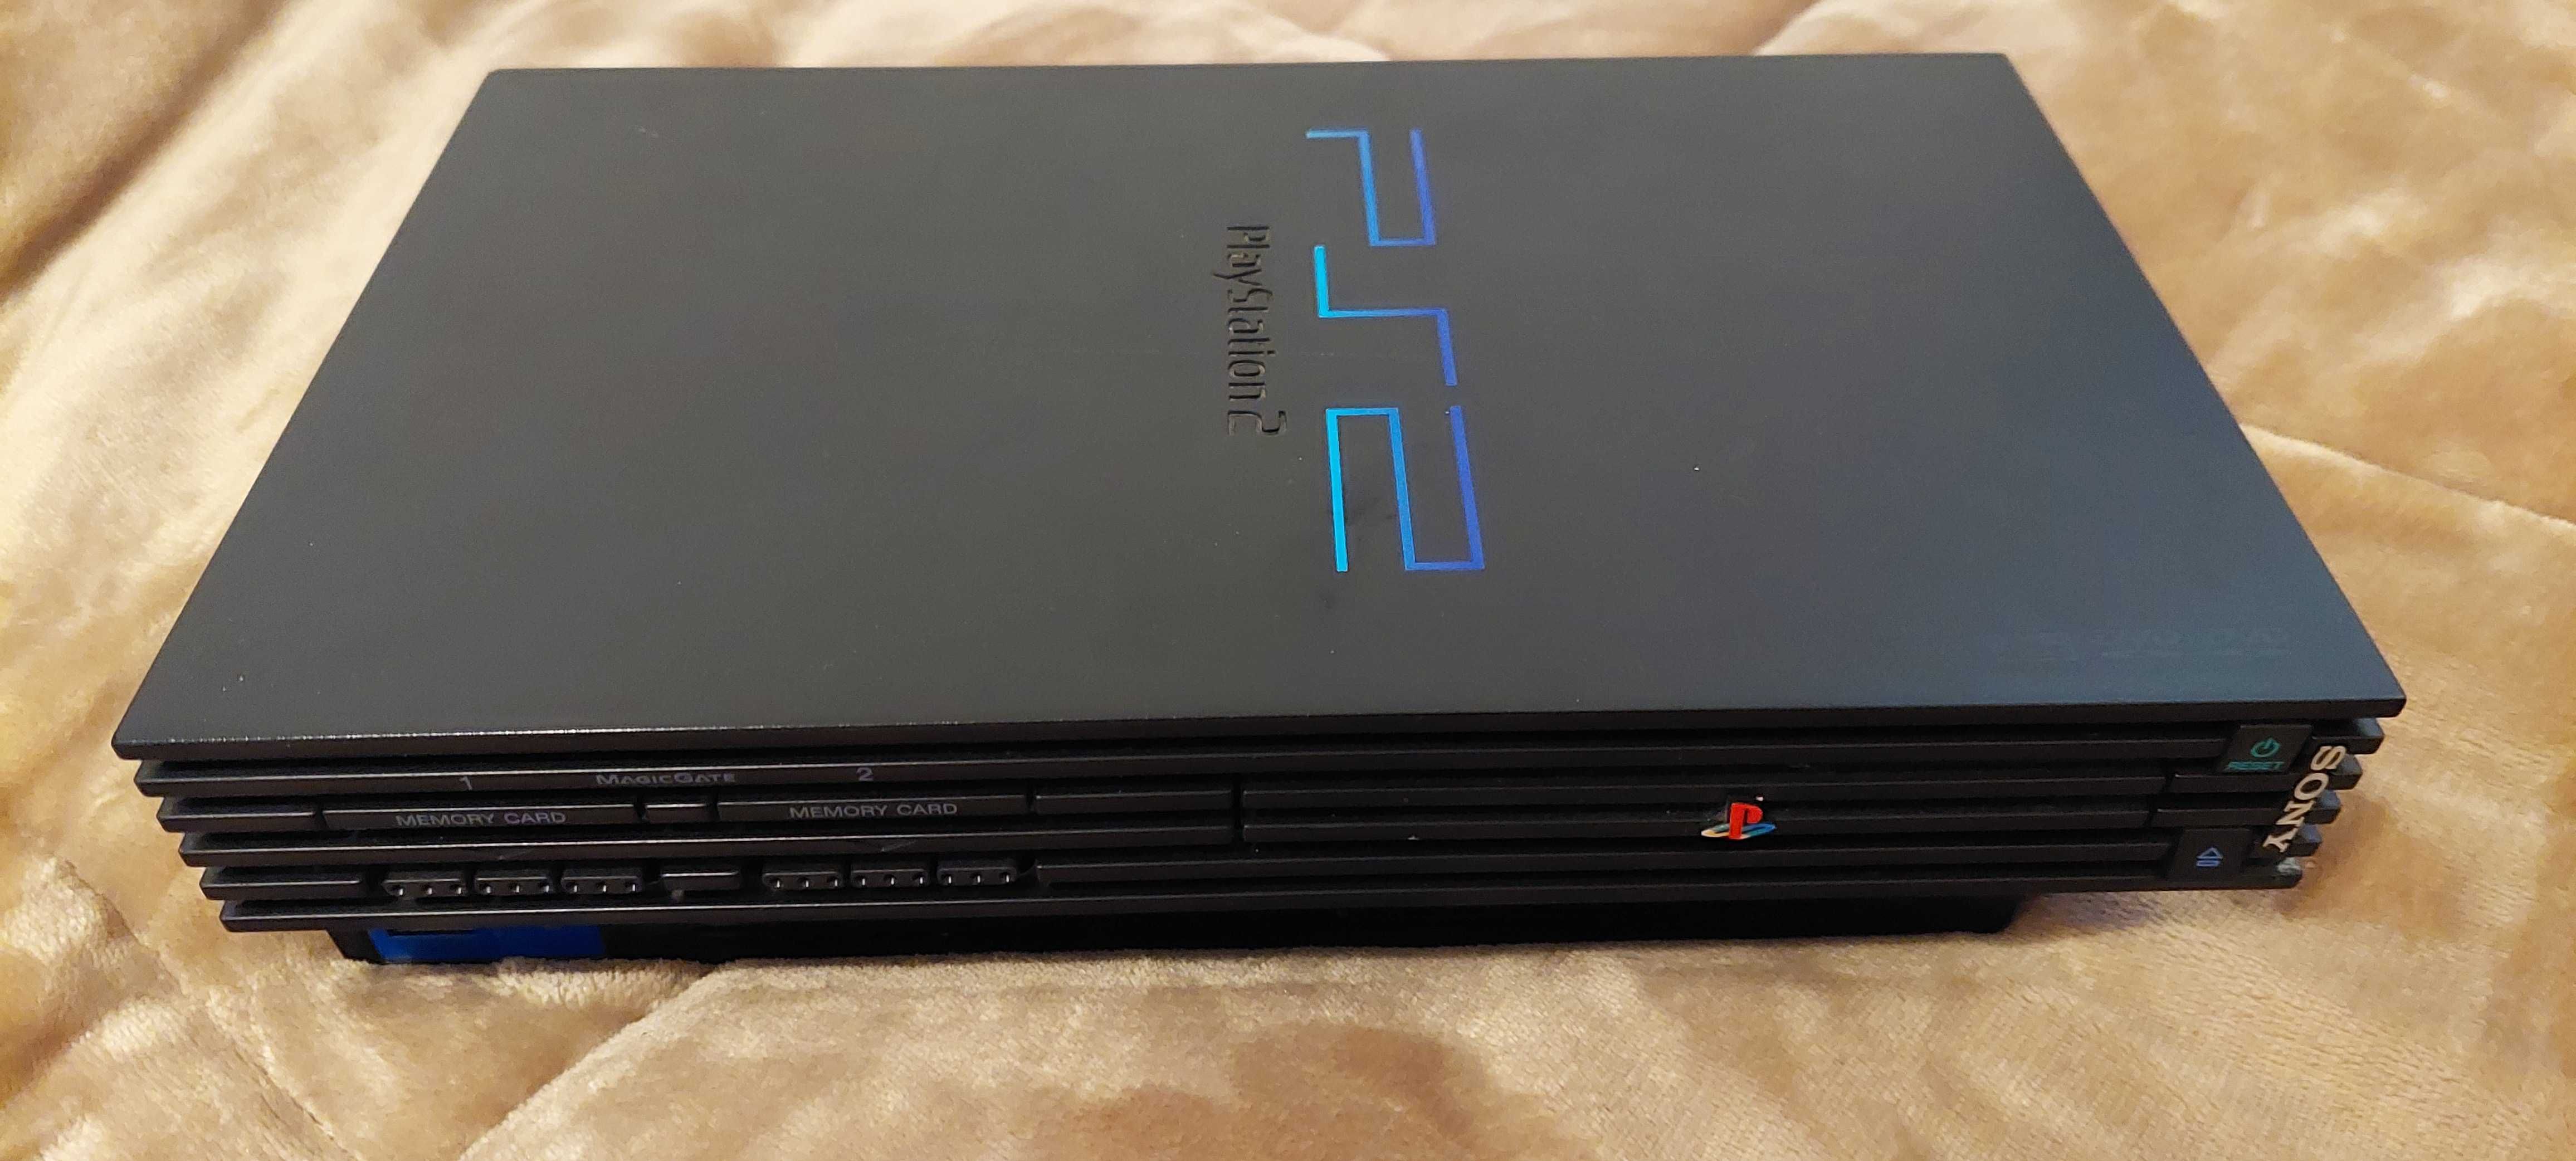 Consola PS2 modelo Fat chipada